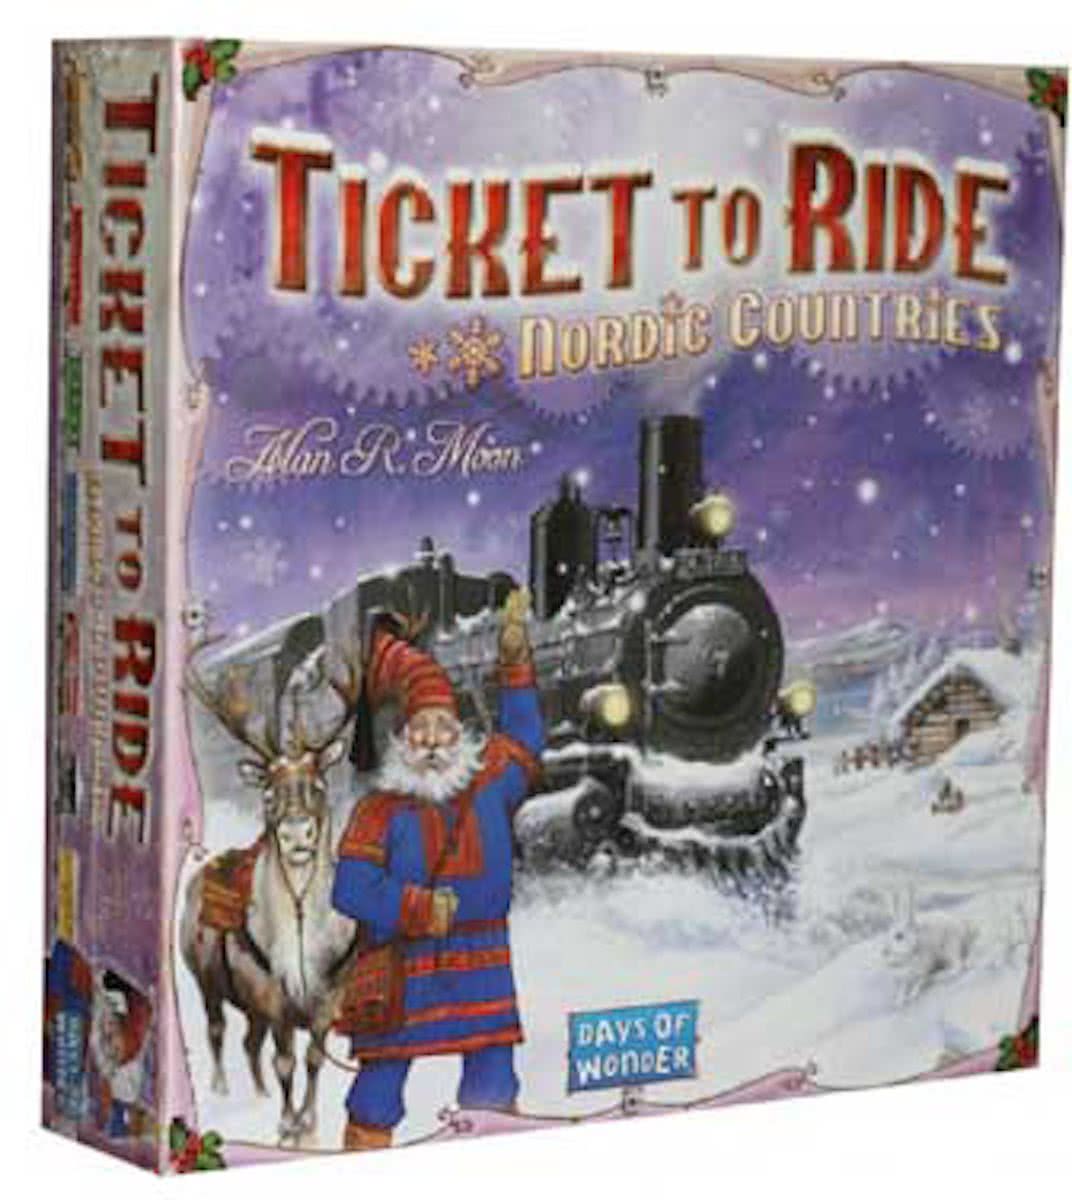 Ticket to Ride: Nordic Countries description reviews